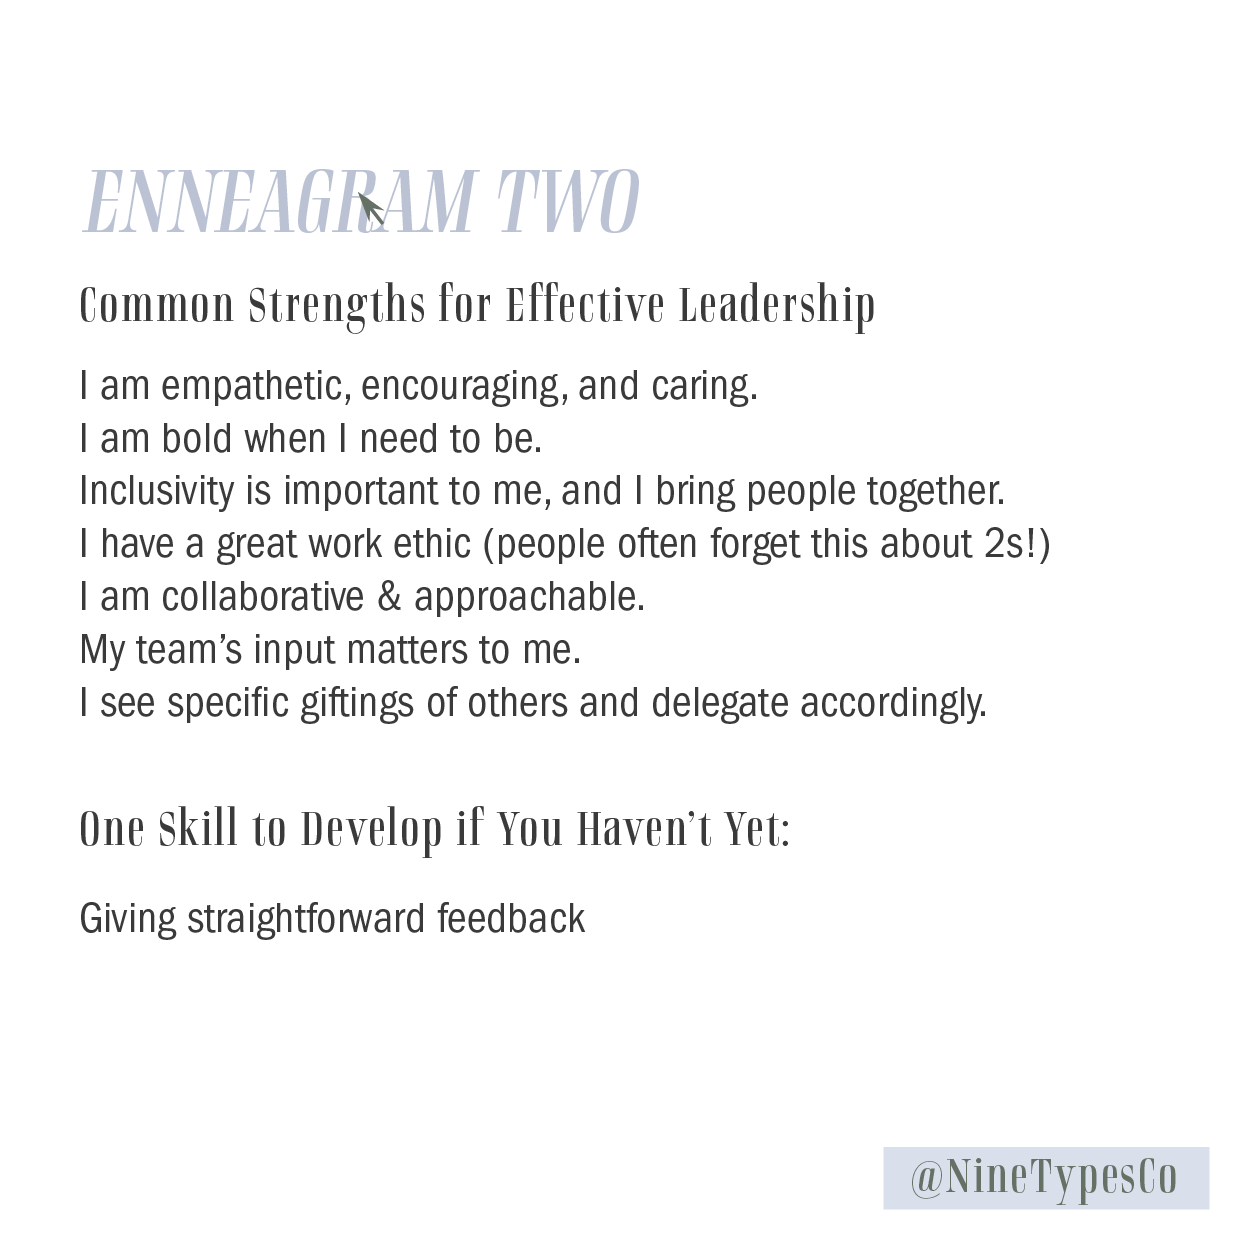 effective+leadership+by+enneagram+type+type+2+-+@0.5x.png